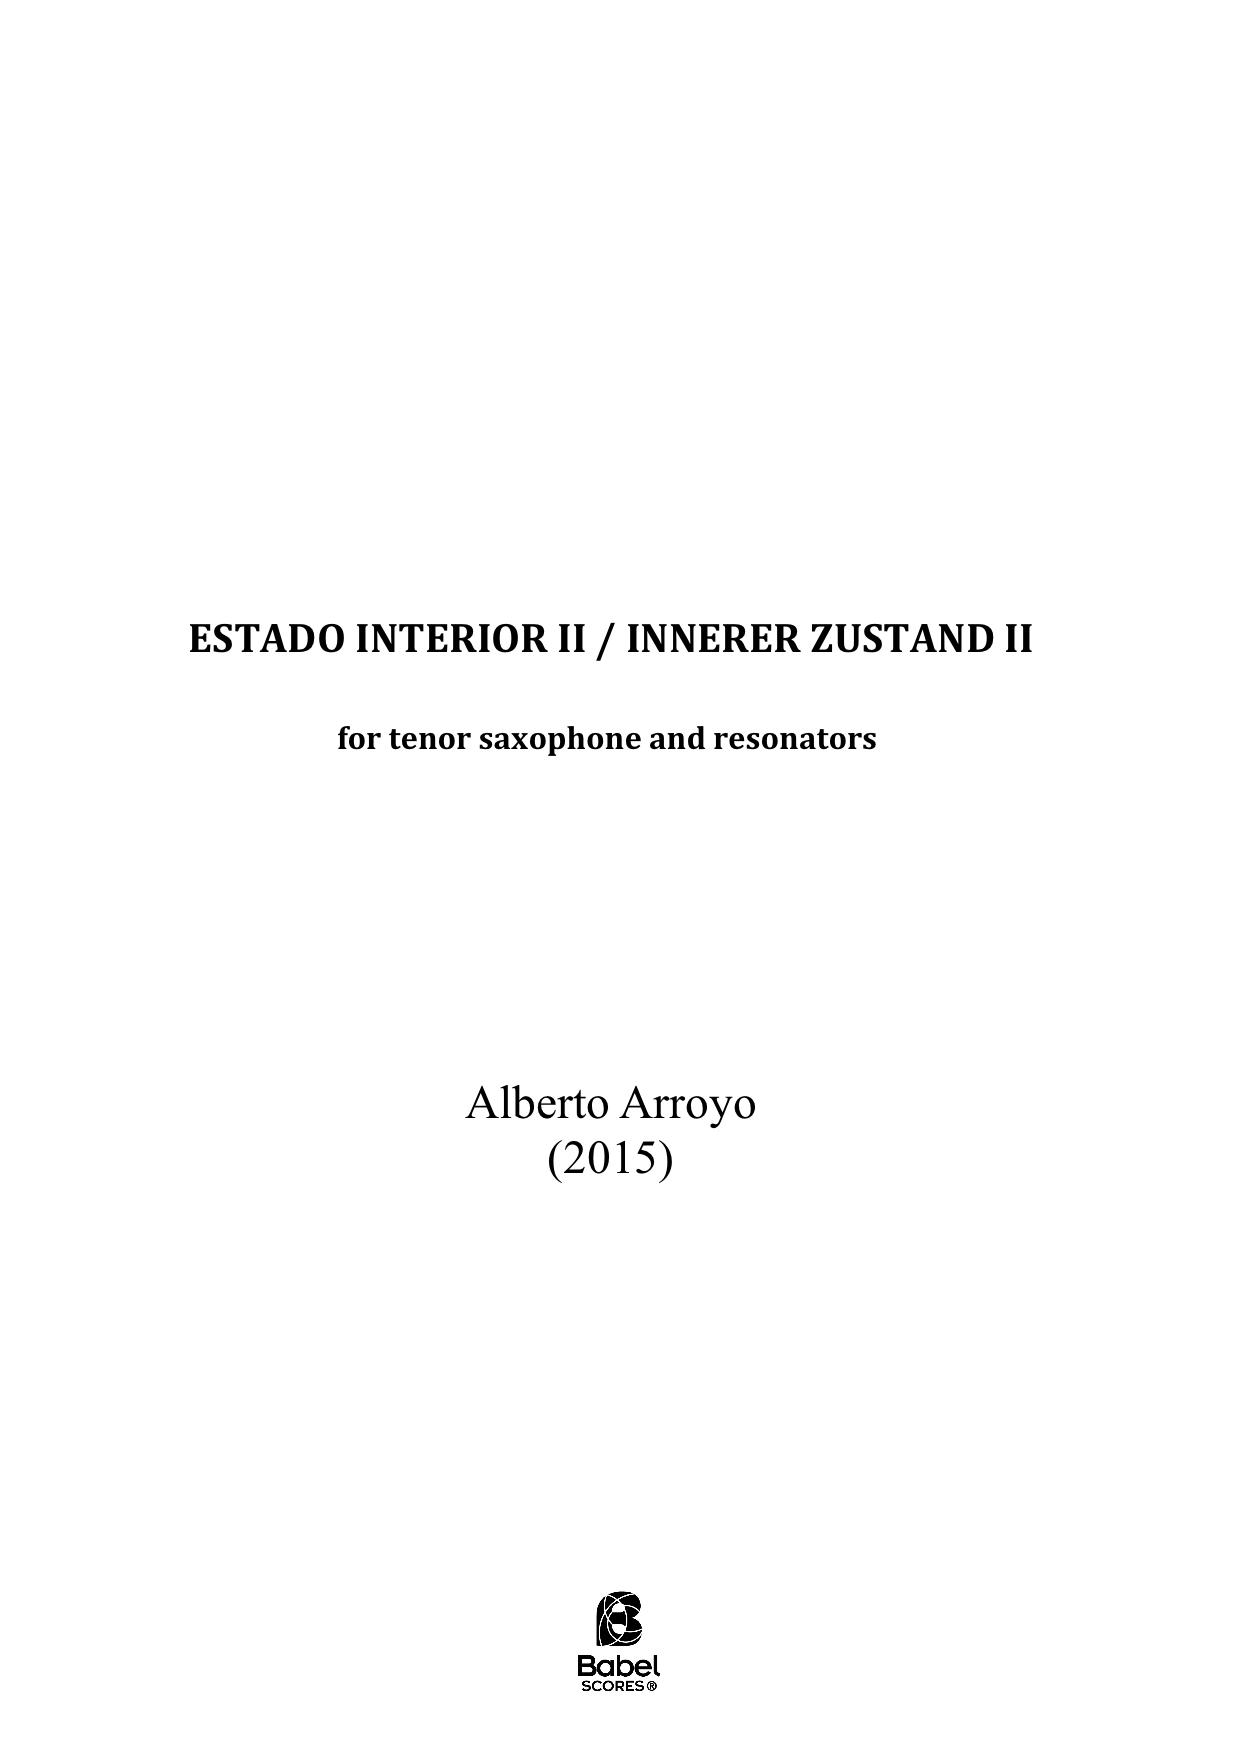 Estado Interior II A4 z 2 1 45